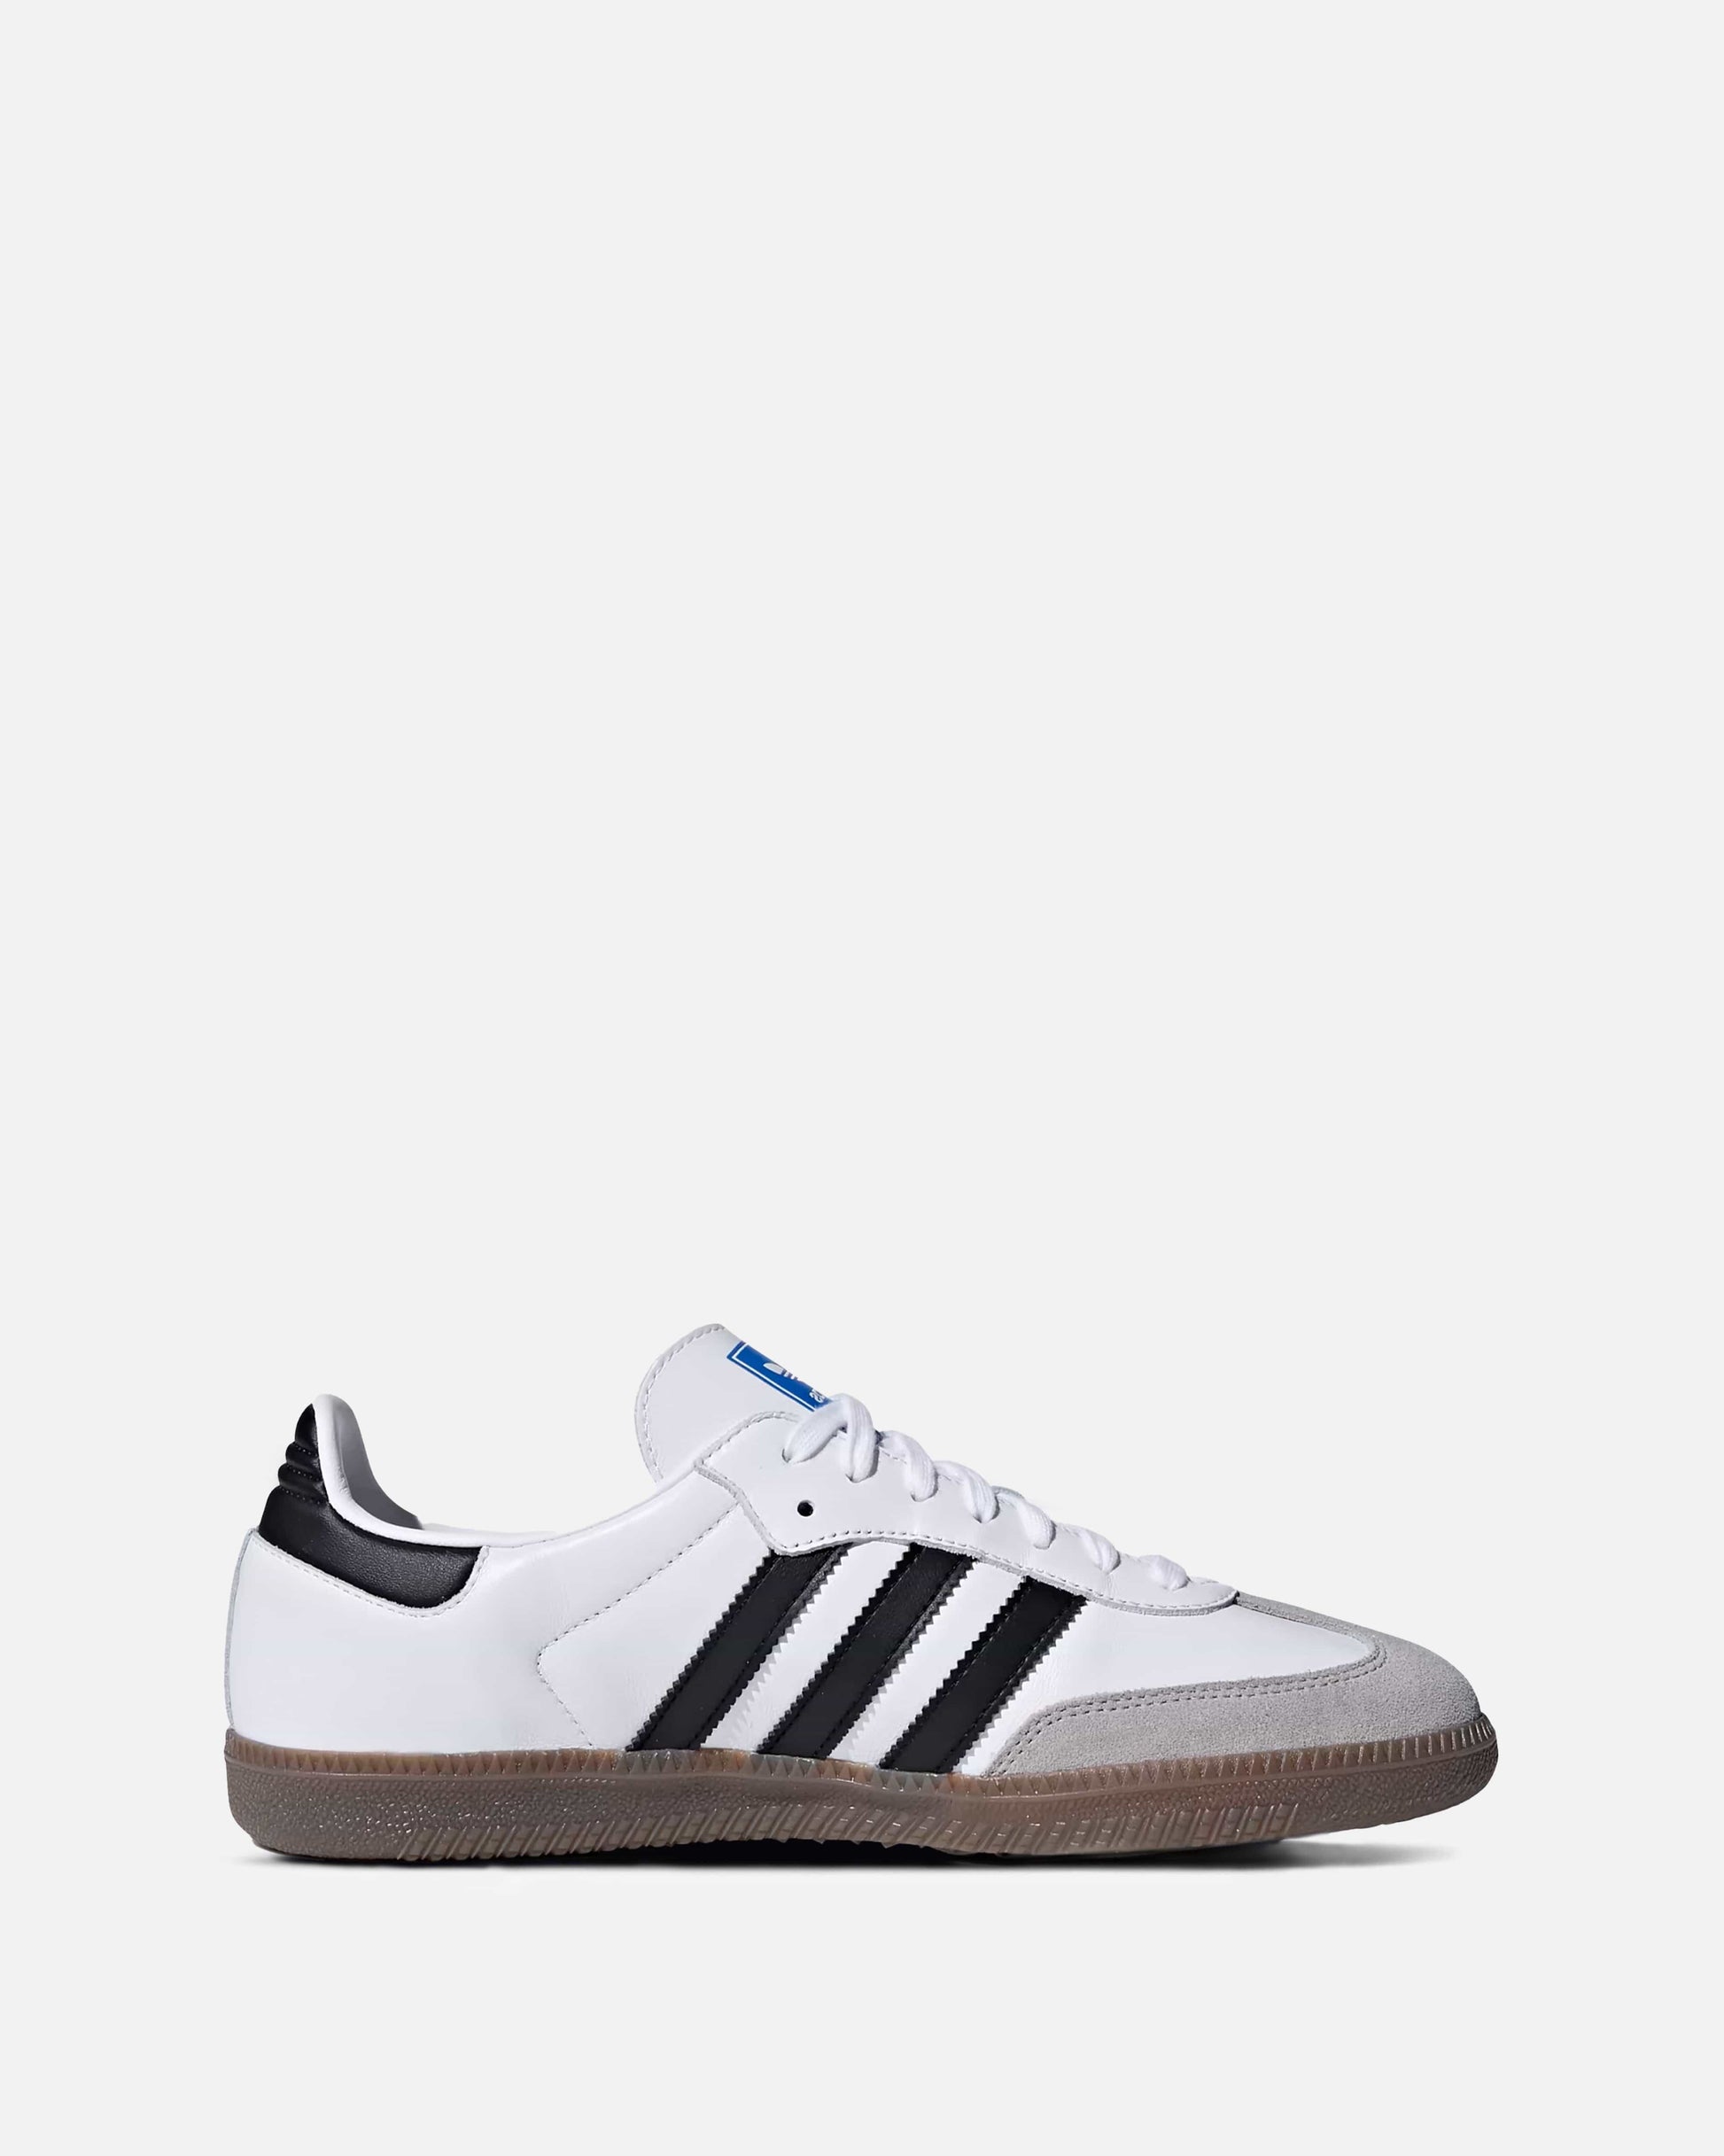 Adidas Men's Sneakers Samba OG 'Cloud White/Core Black'